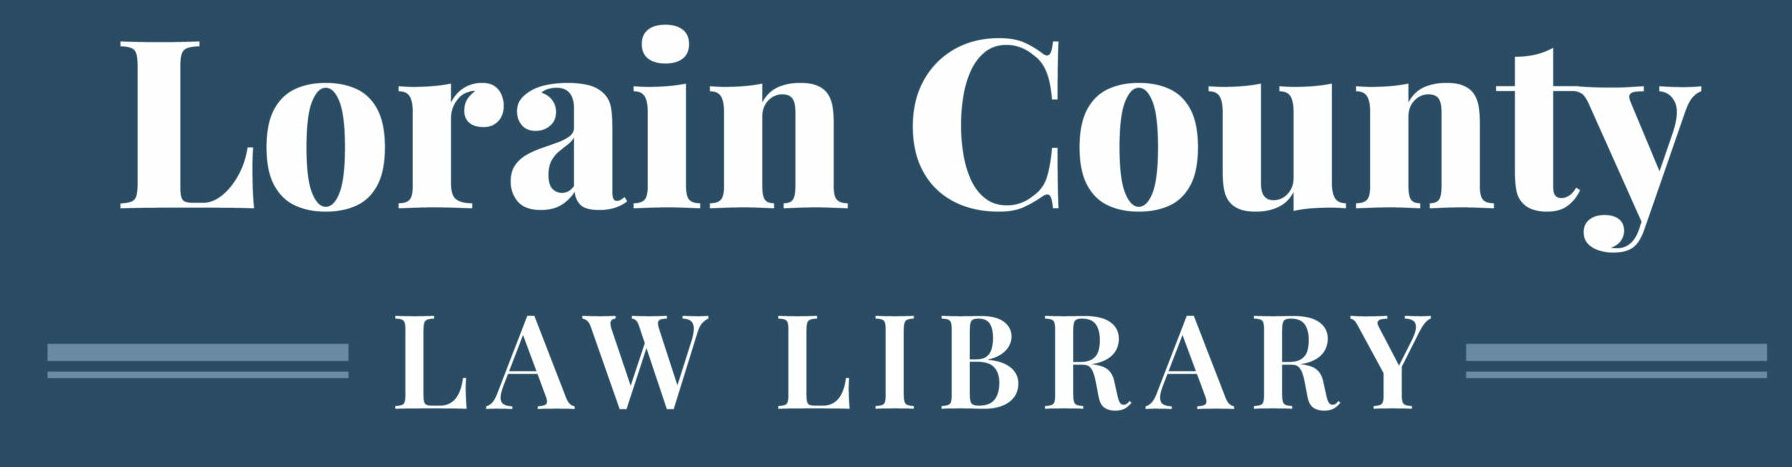 lorain county law library logo